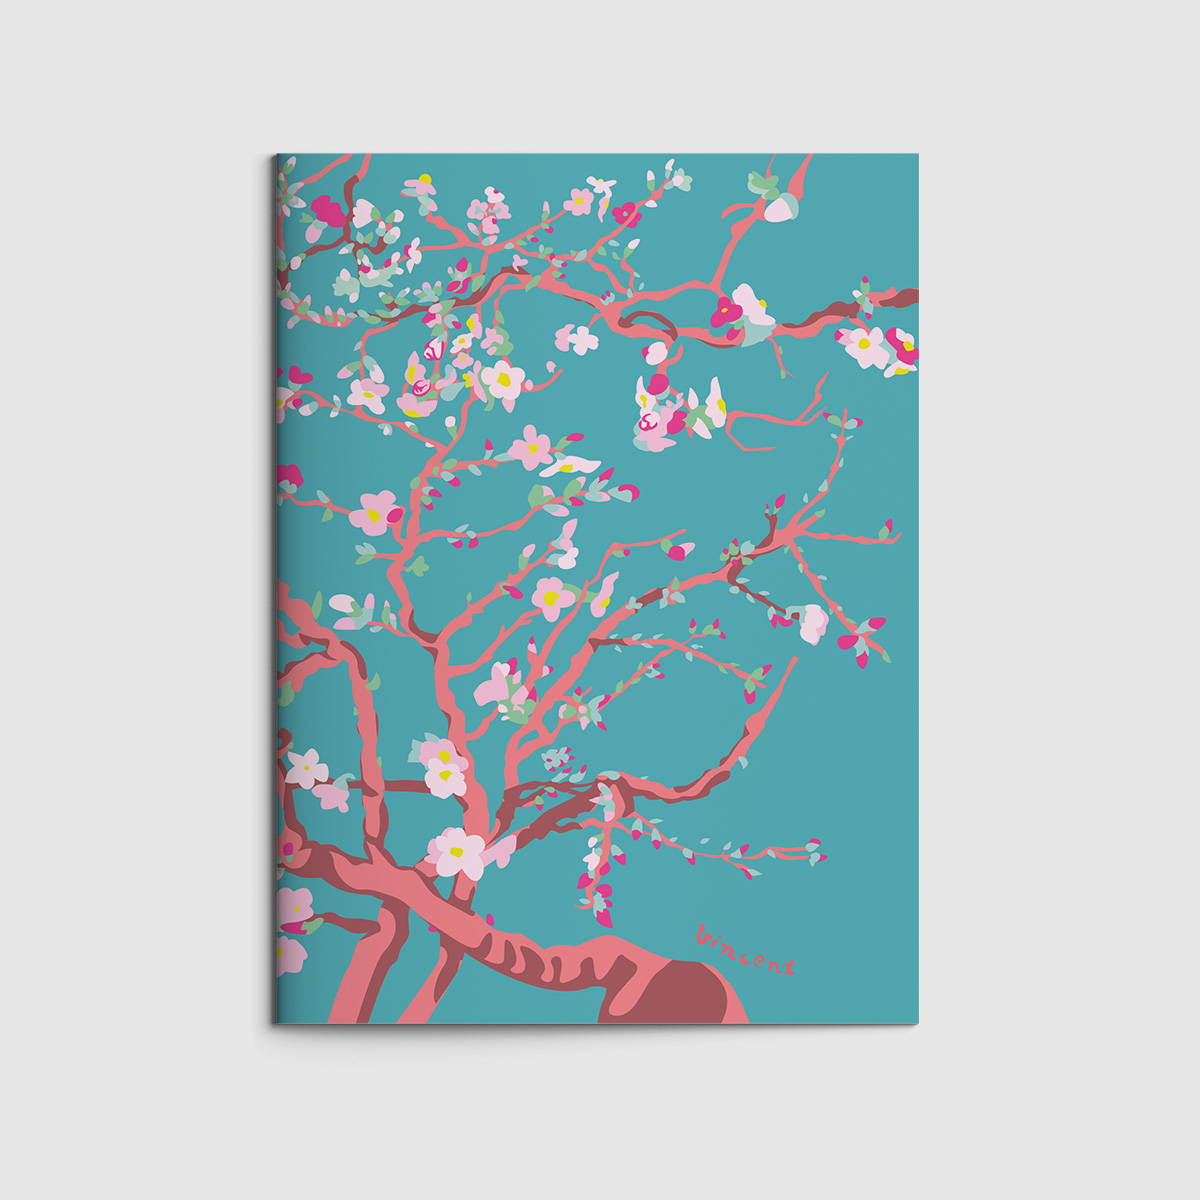 Booklet A6 - Museum Art - Almond blossom, van Gogh